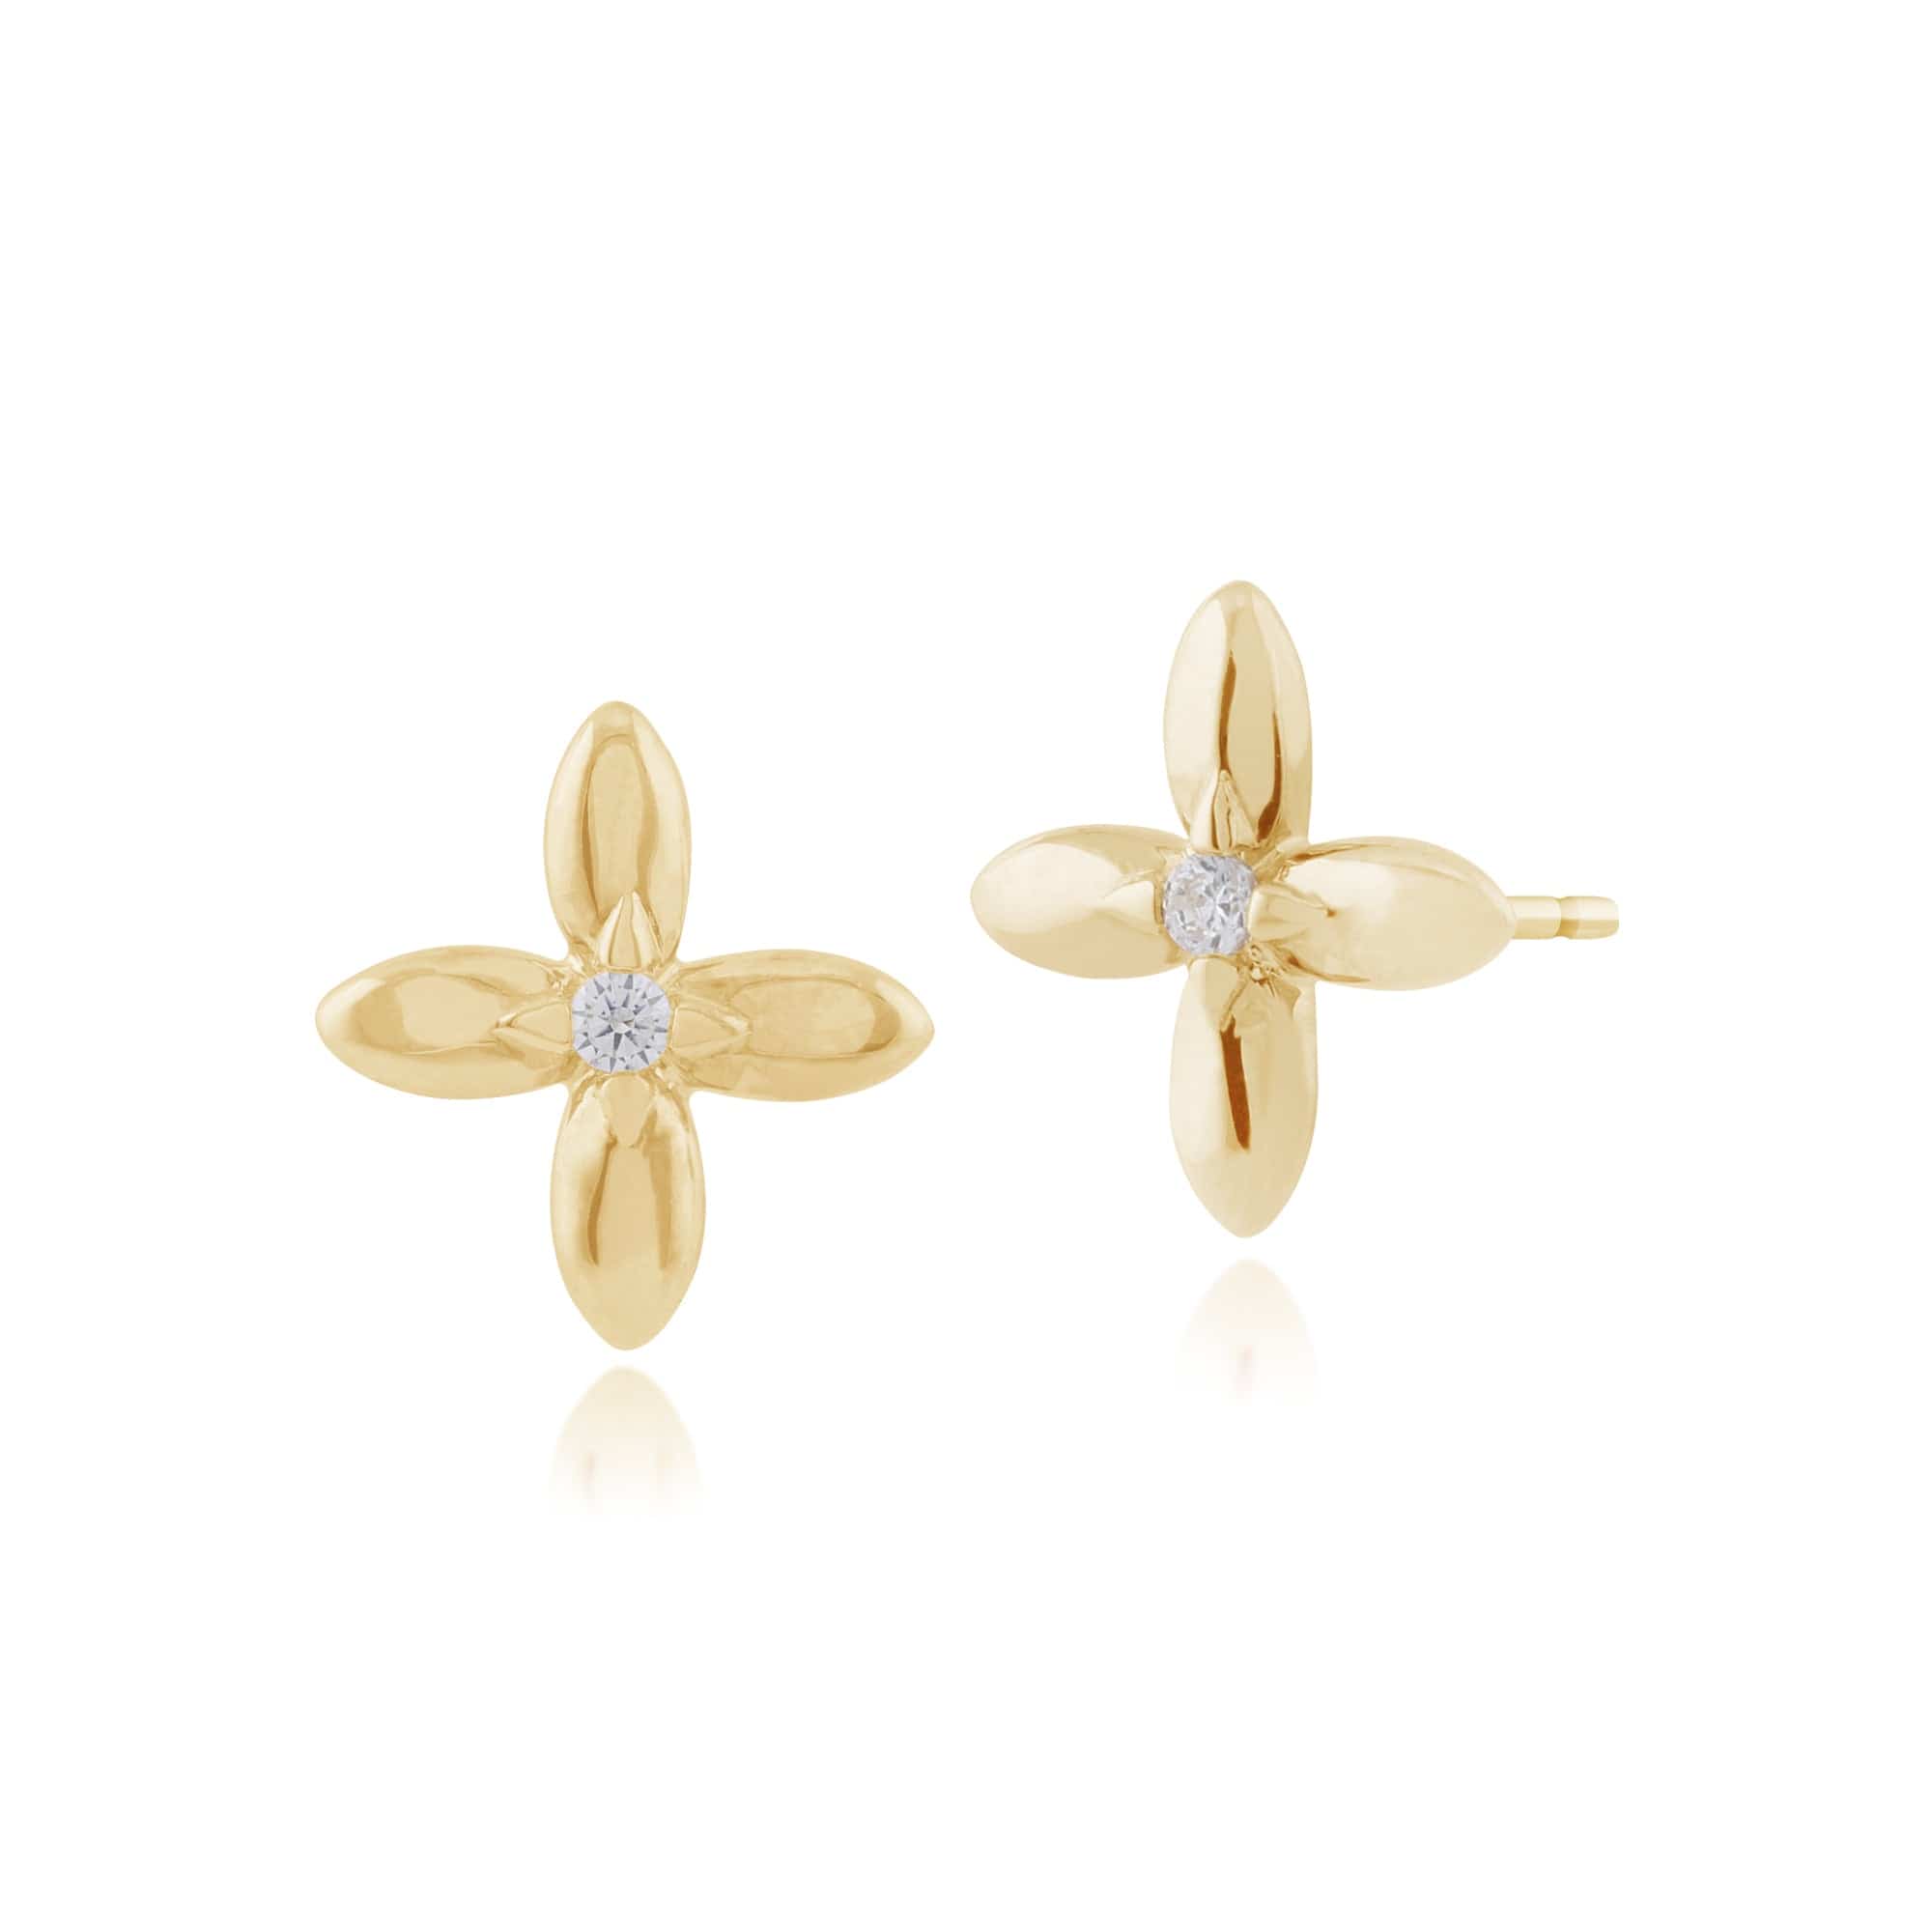 Floral Round Diamond Golden Flower Stud Earrings in 9ct Yellow Gold - Gemondo